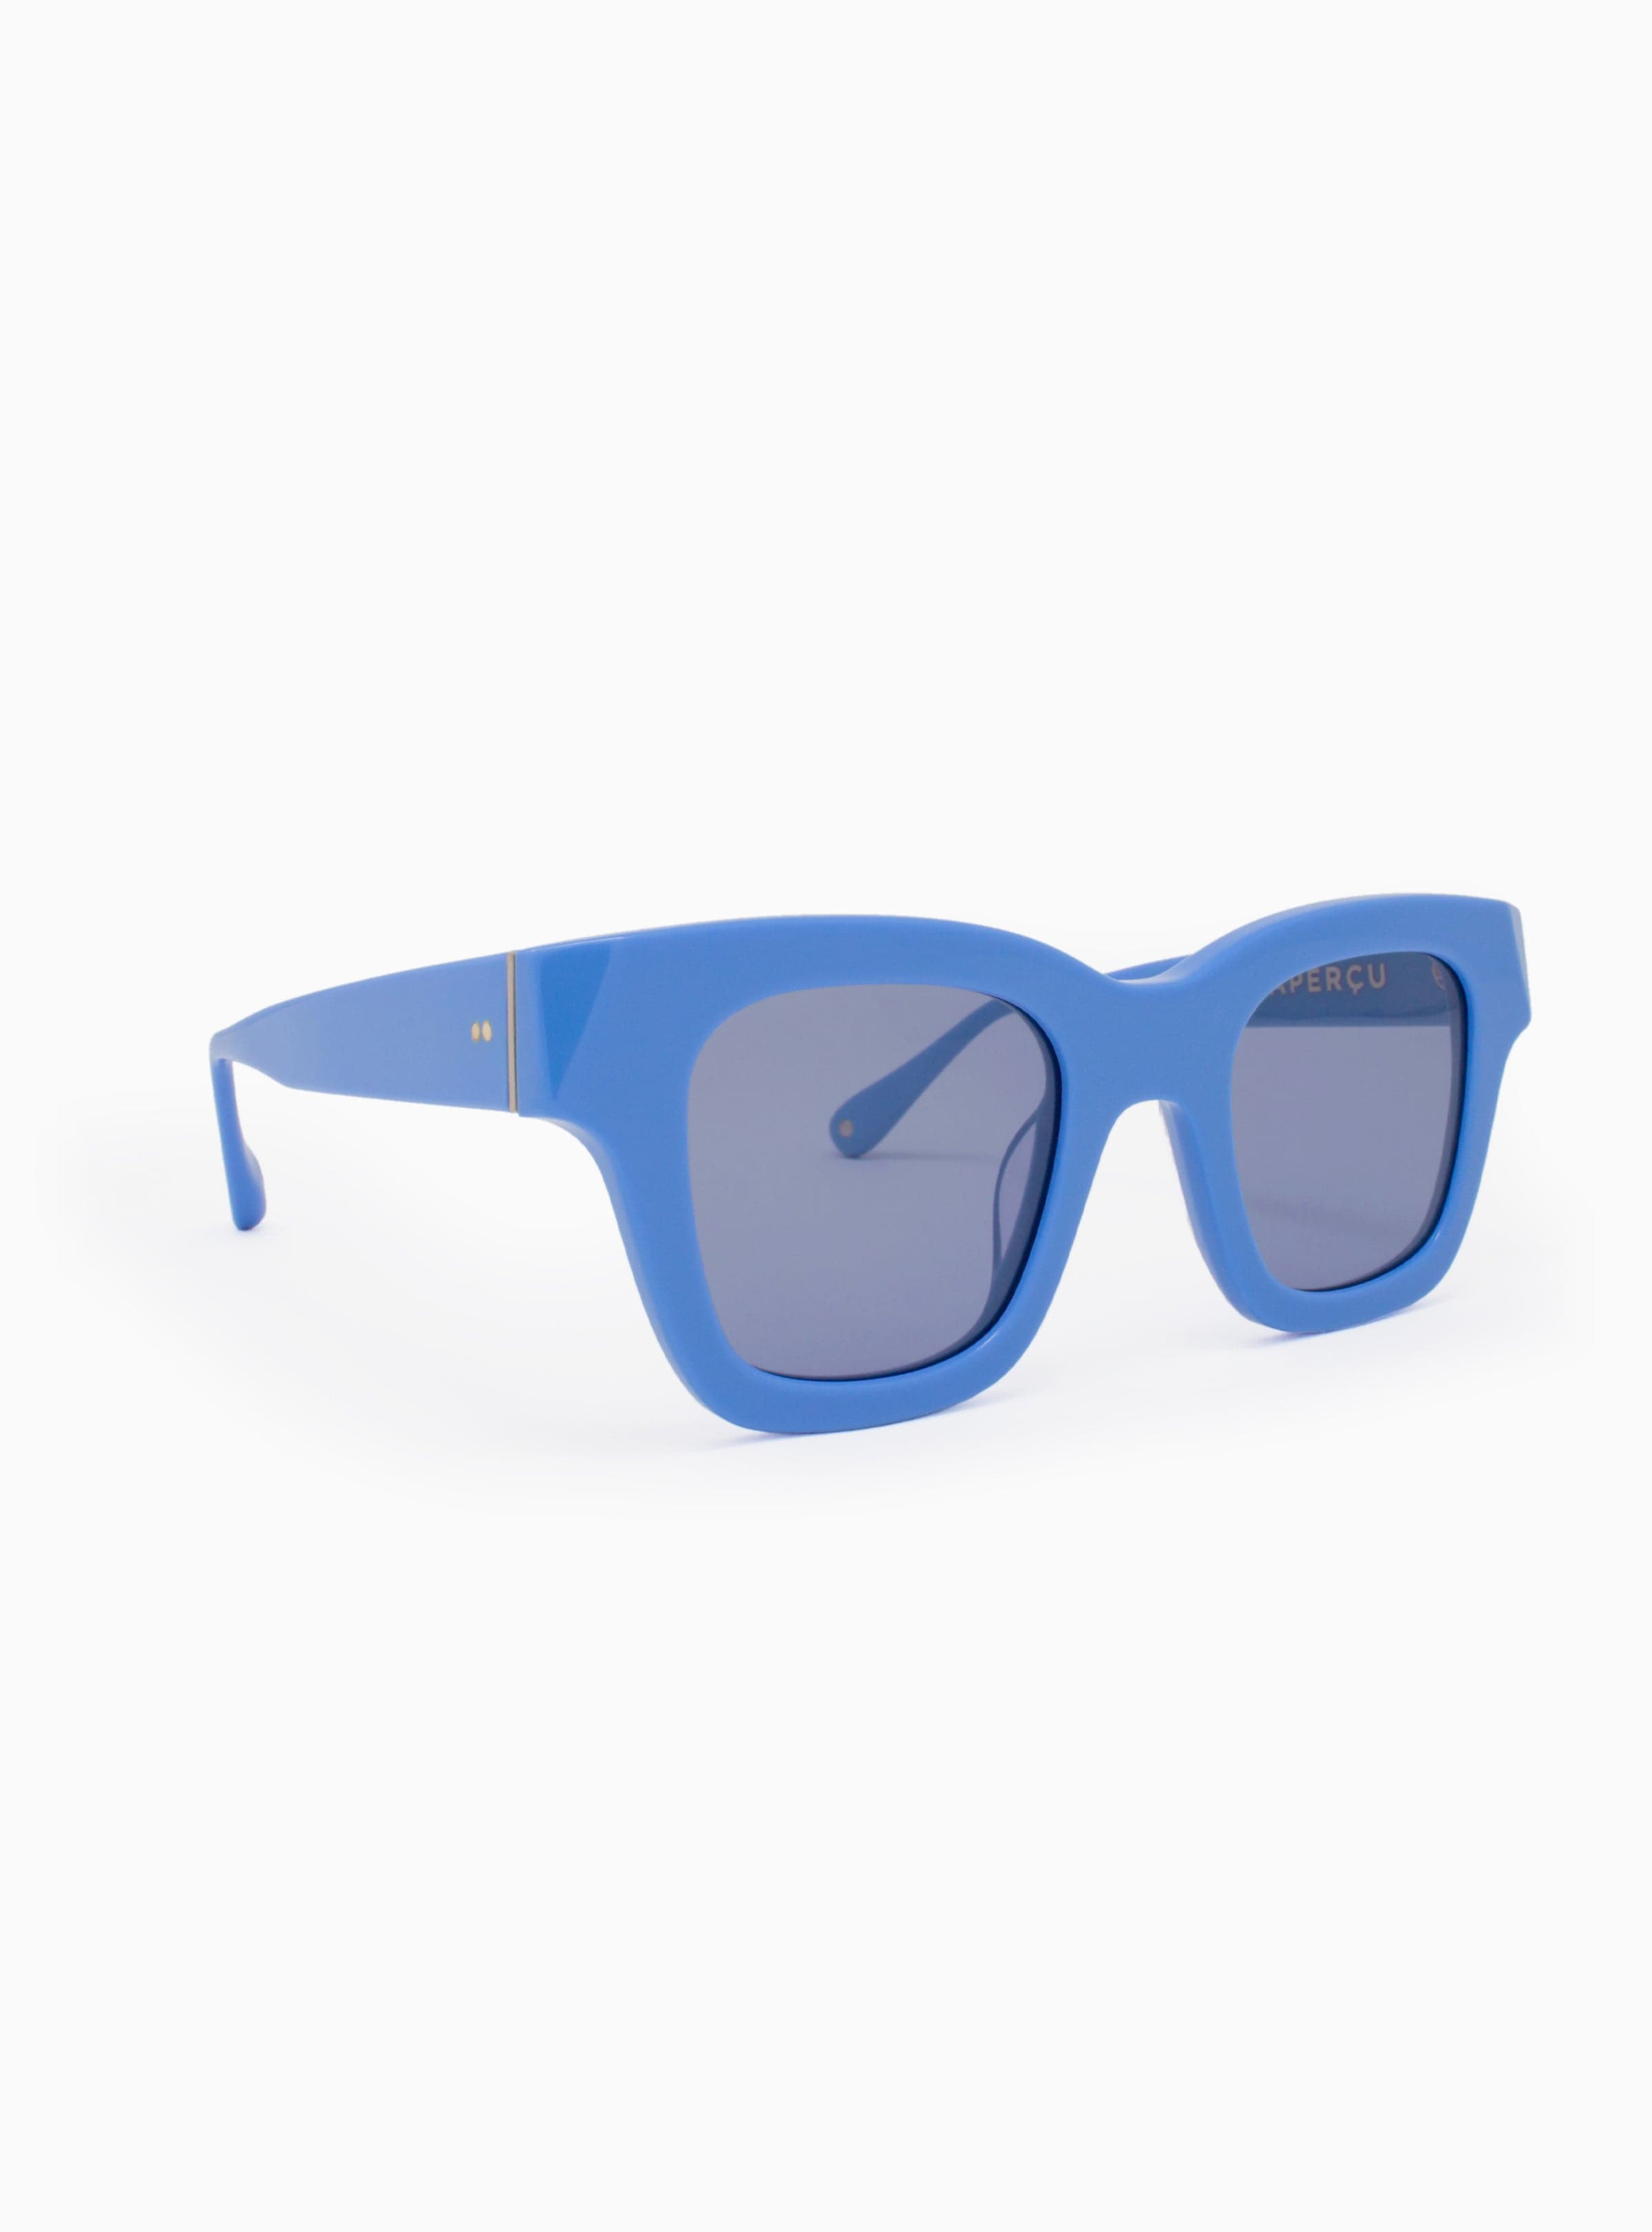 Luxury sunglasses // Aperçu Eyewear Essentials // Fashion sunglasses ...